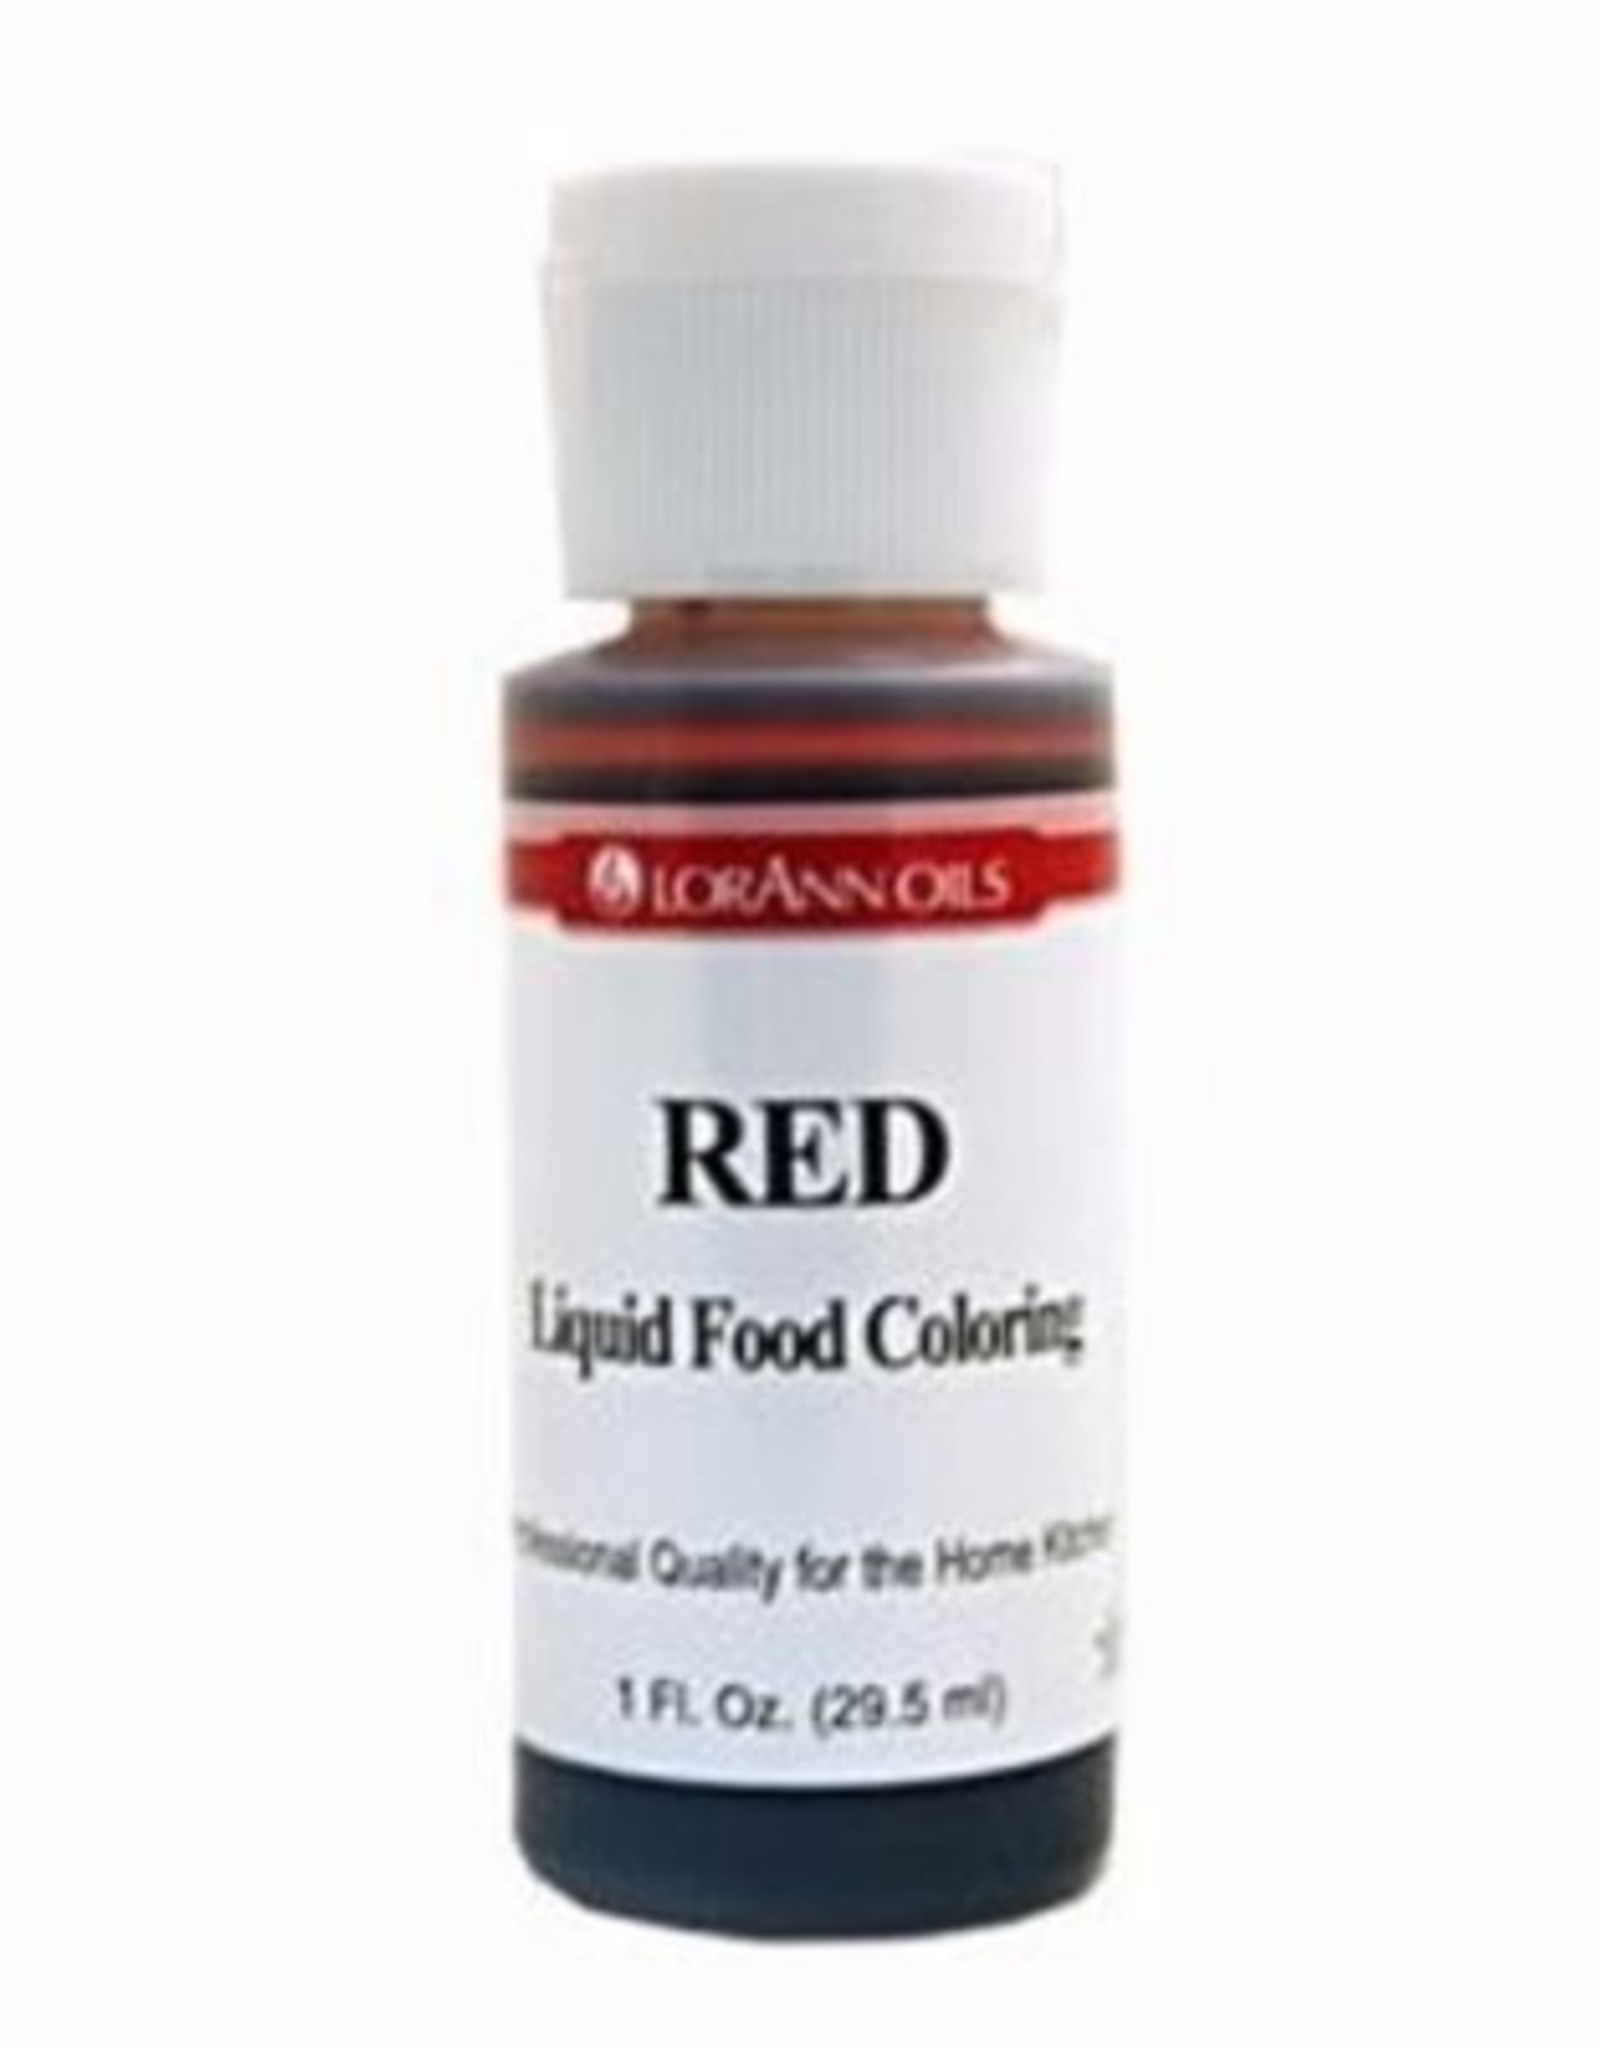 Red Liquid Food Coloring